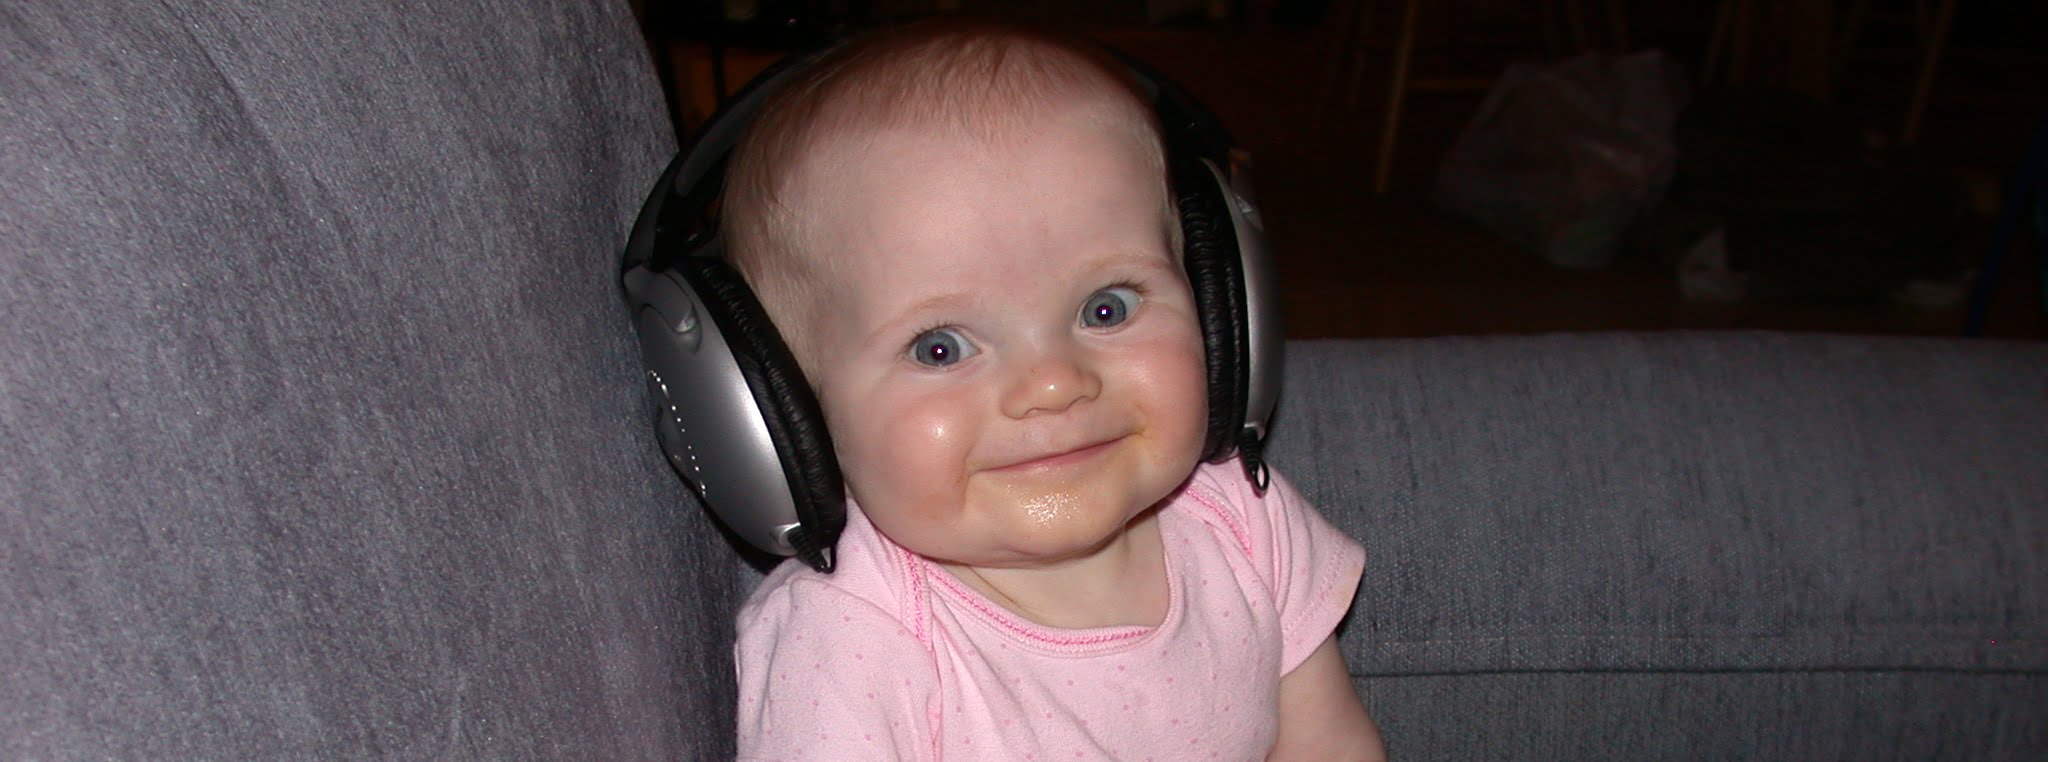 Cute Baby Listening To Music Ipod E1412721164710 مجلة نقطة العلمية